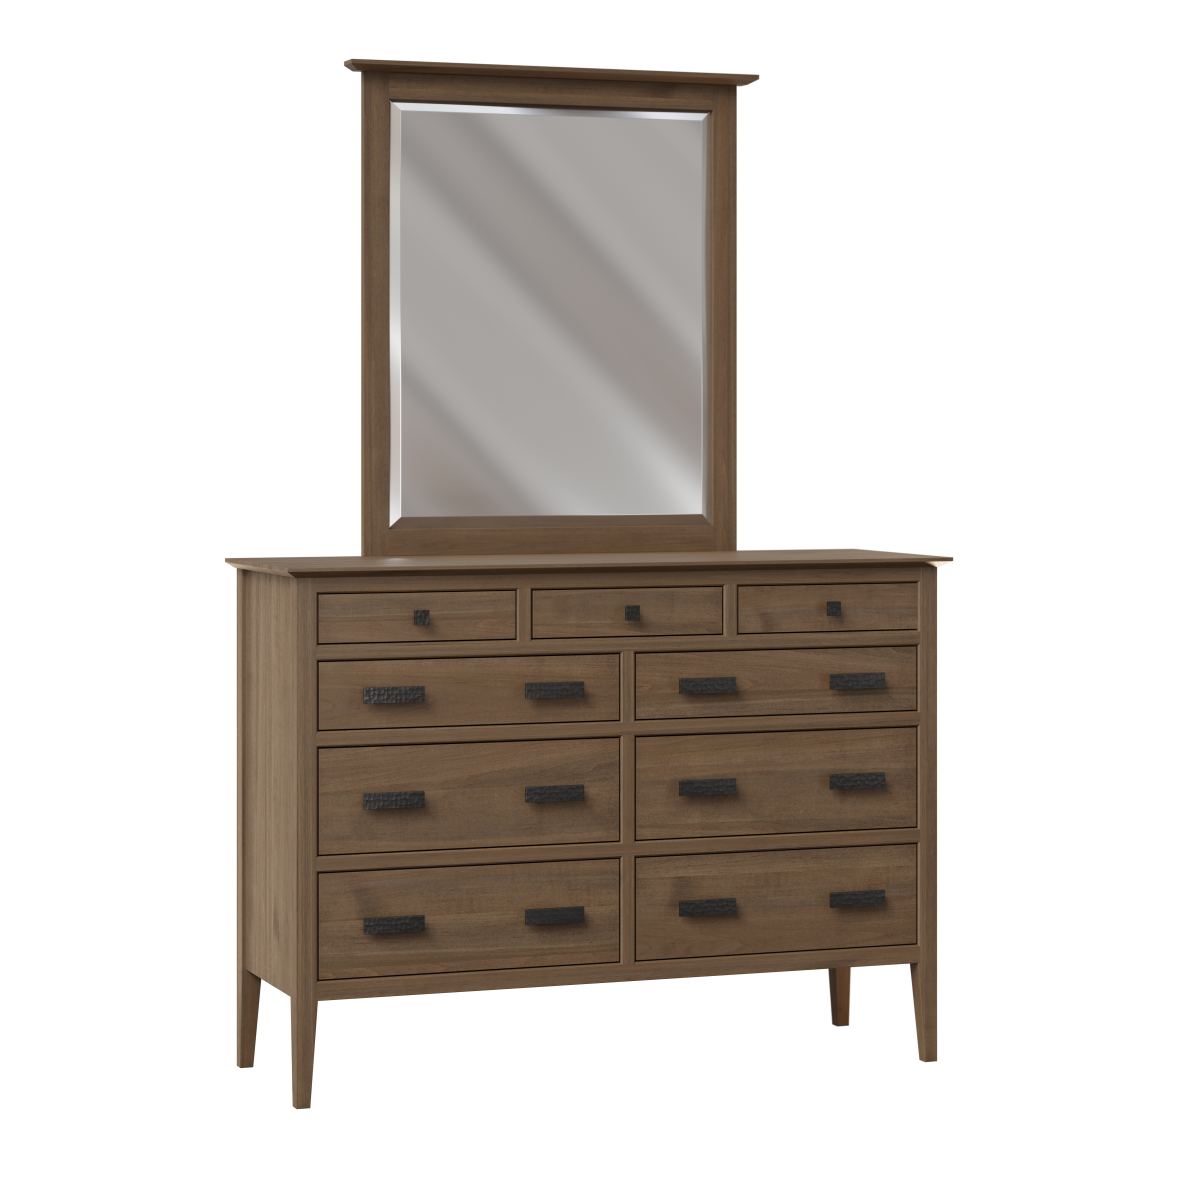 Barkman Waterford 9 drawer dresser with Deluxe Mirror